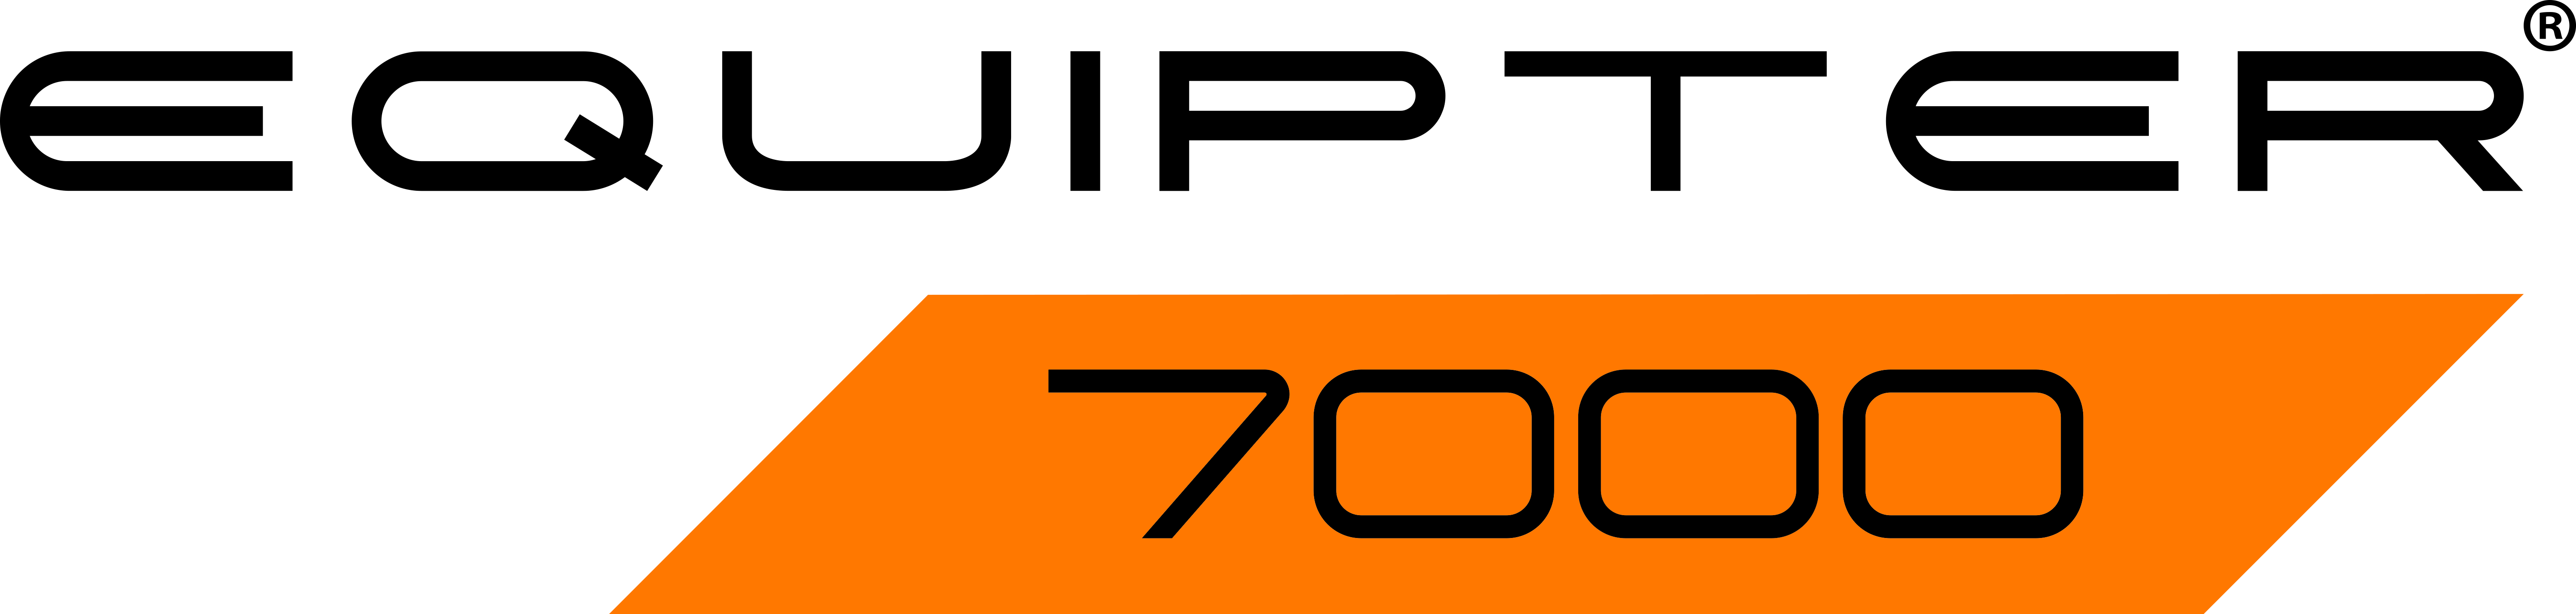 Equipter 7000 Logo